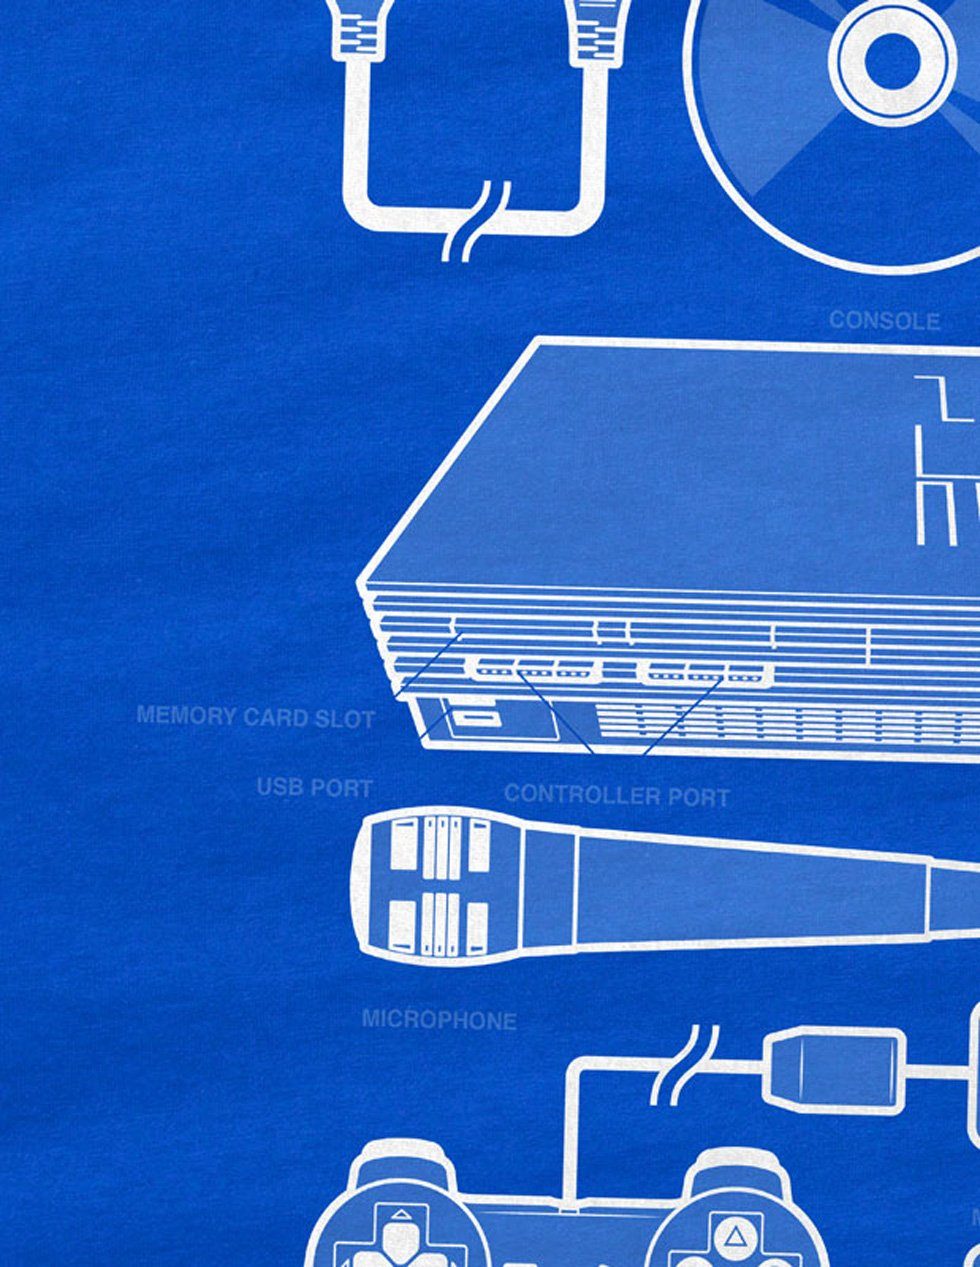 PS2 T-Shirt style3 konsole gamepad Print-Shirt Gamer Retro classic Herren blau PS